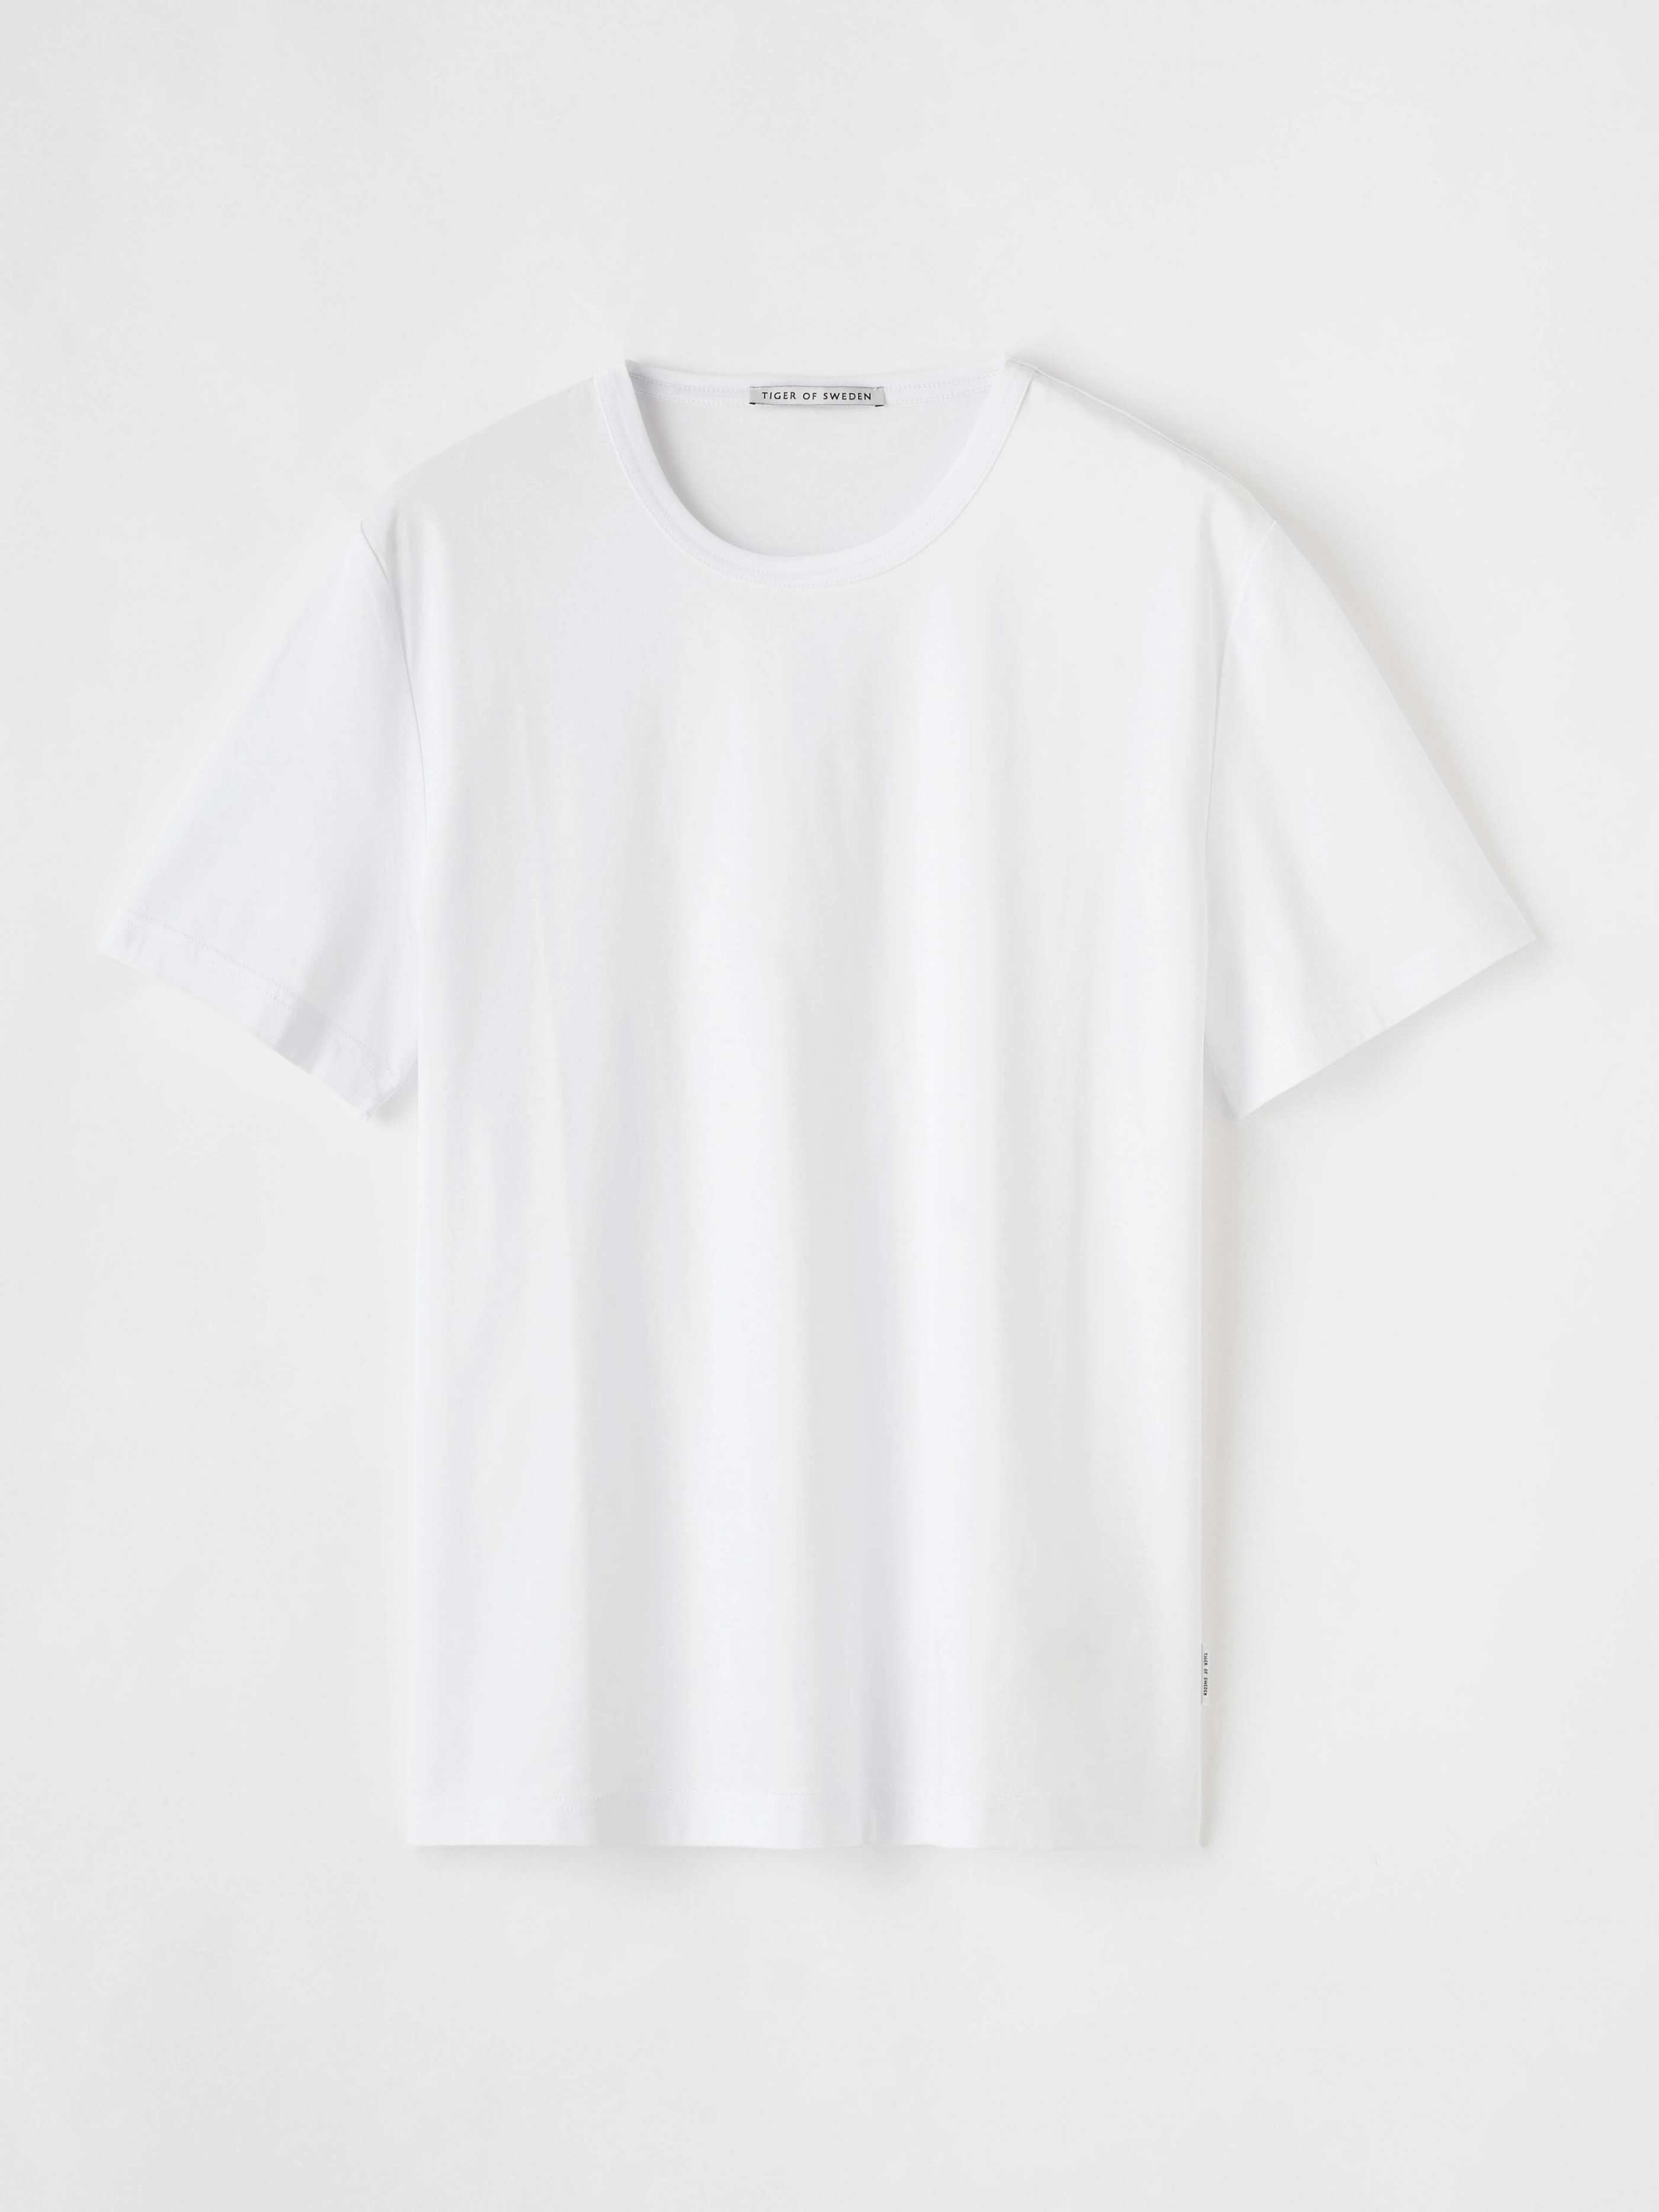 Olaf T-shirt - Buy T-shirts online